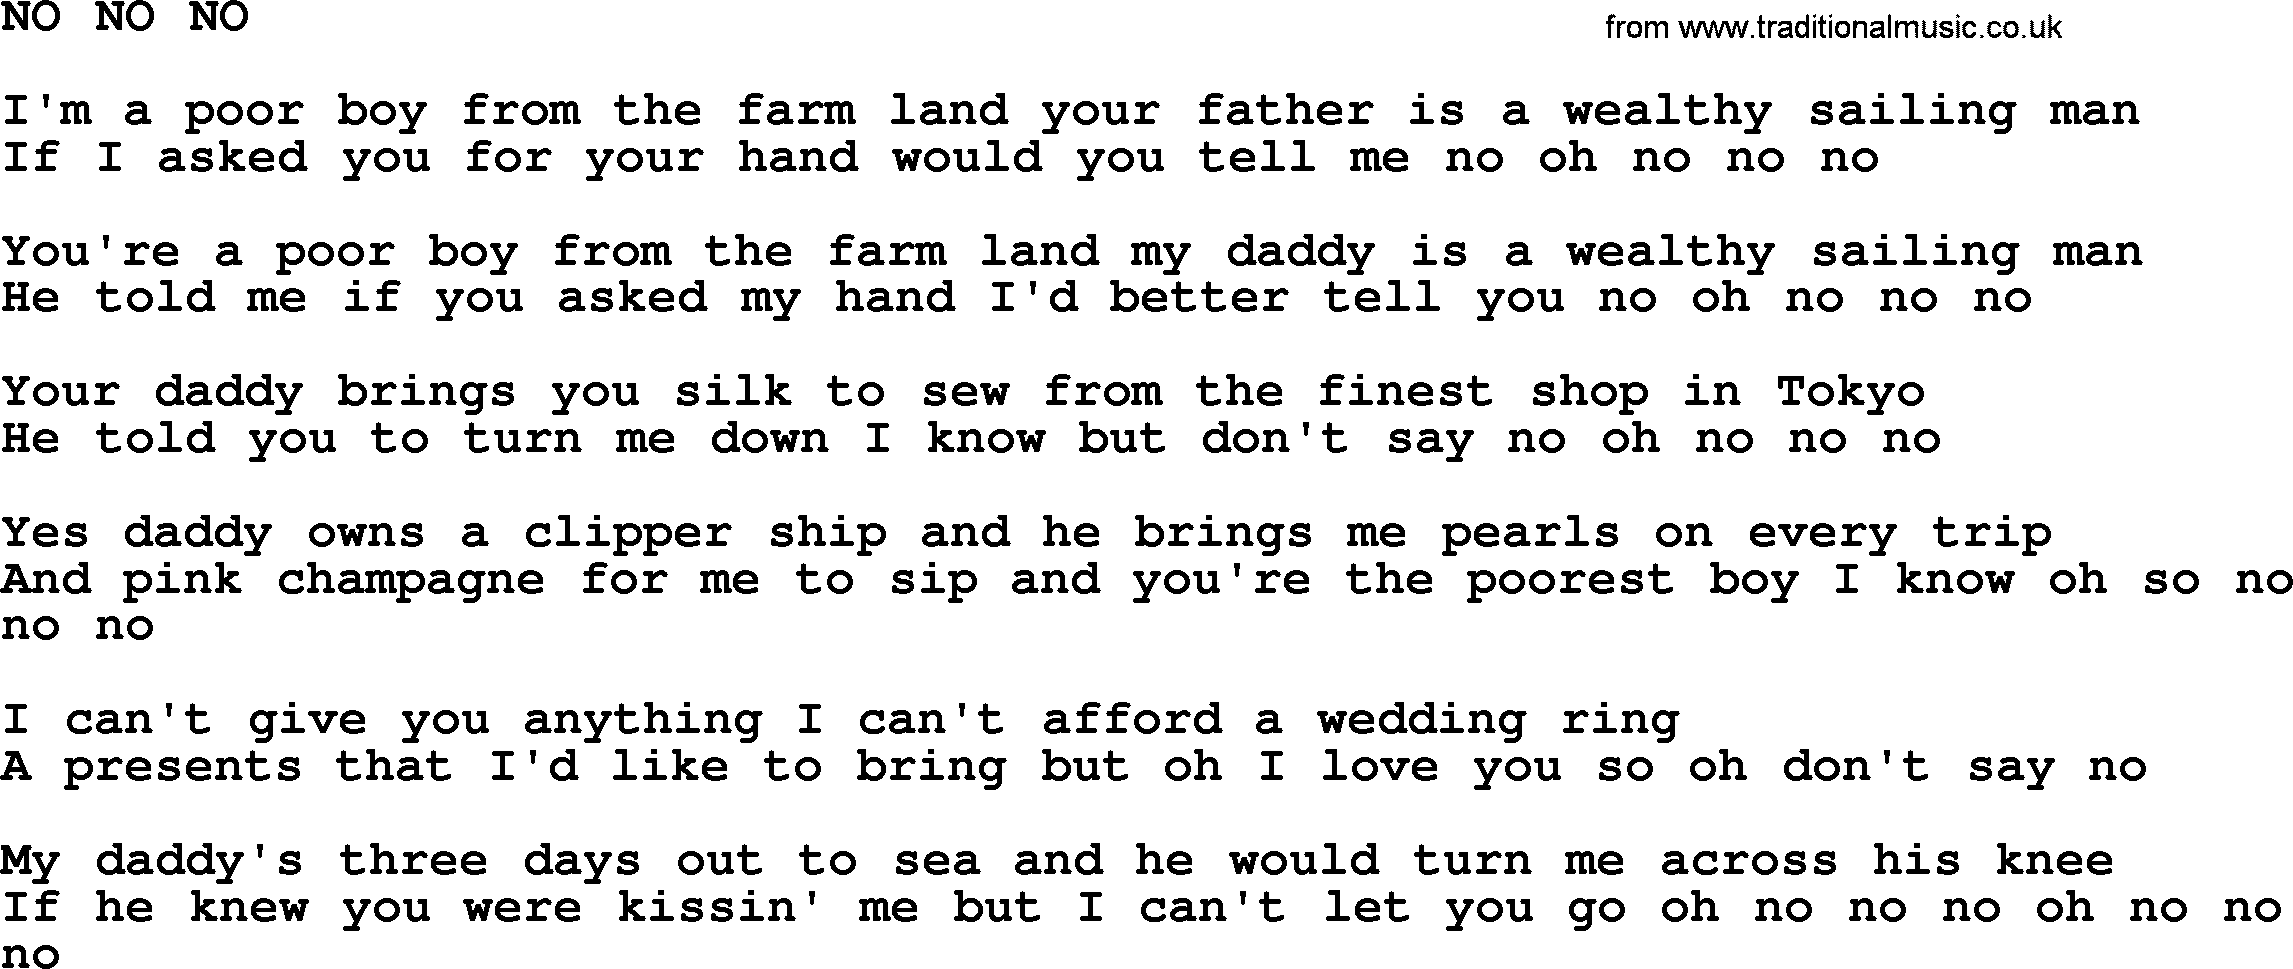 Johnny Cash song No No No.txt lyrics